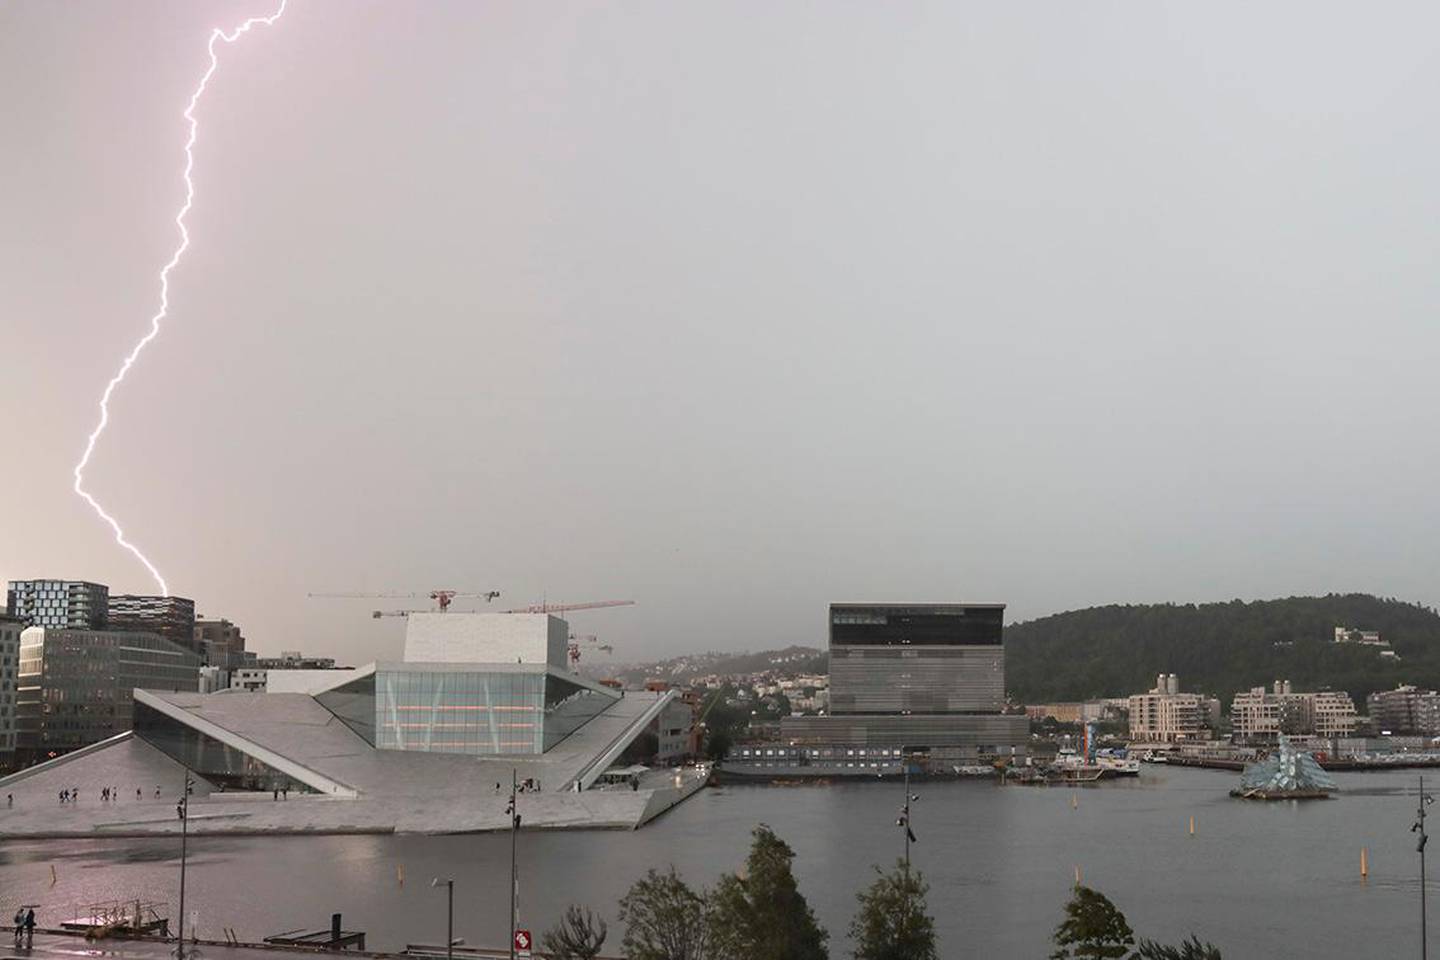 Oslo  20190606.
Lyn og torden over Operaen i Oslo.
Foto: ÿrn E. Borgen / NTB scanpix